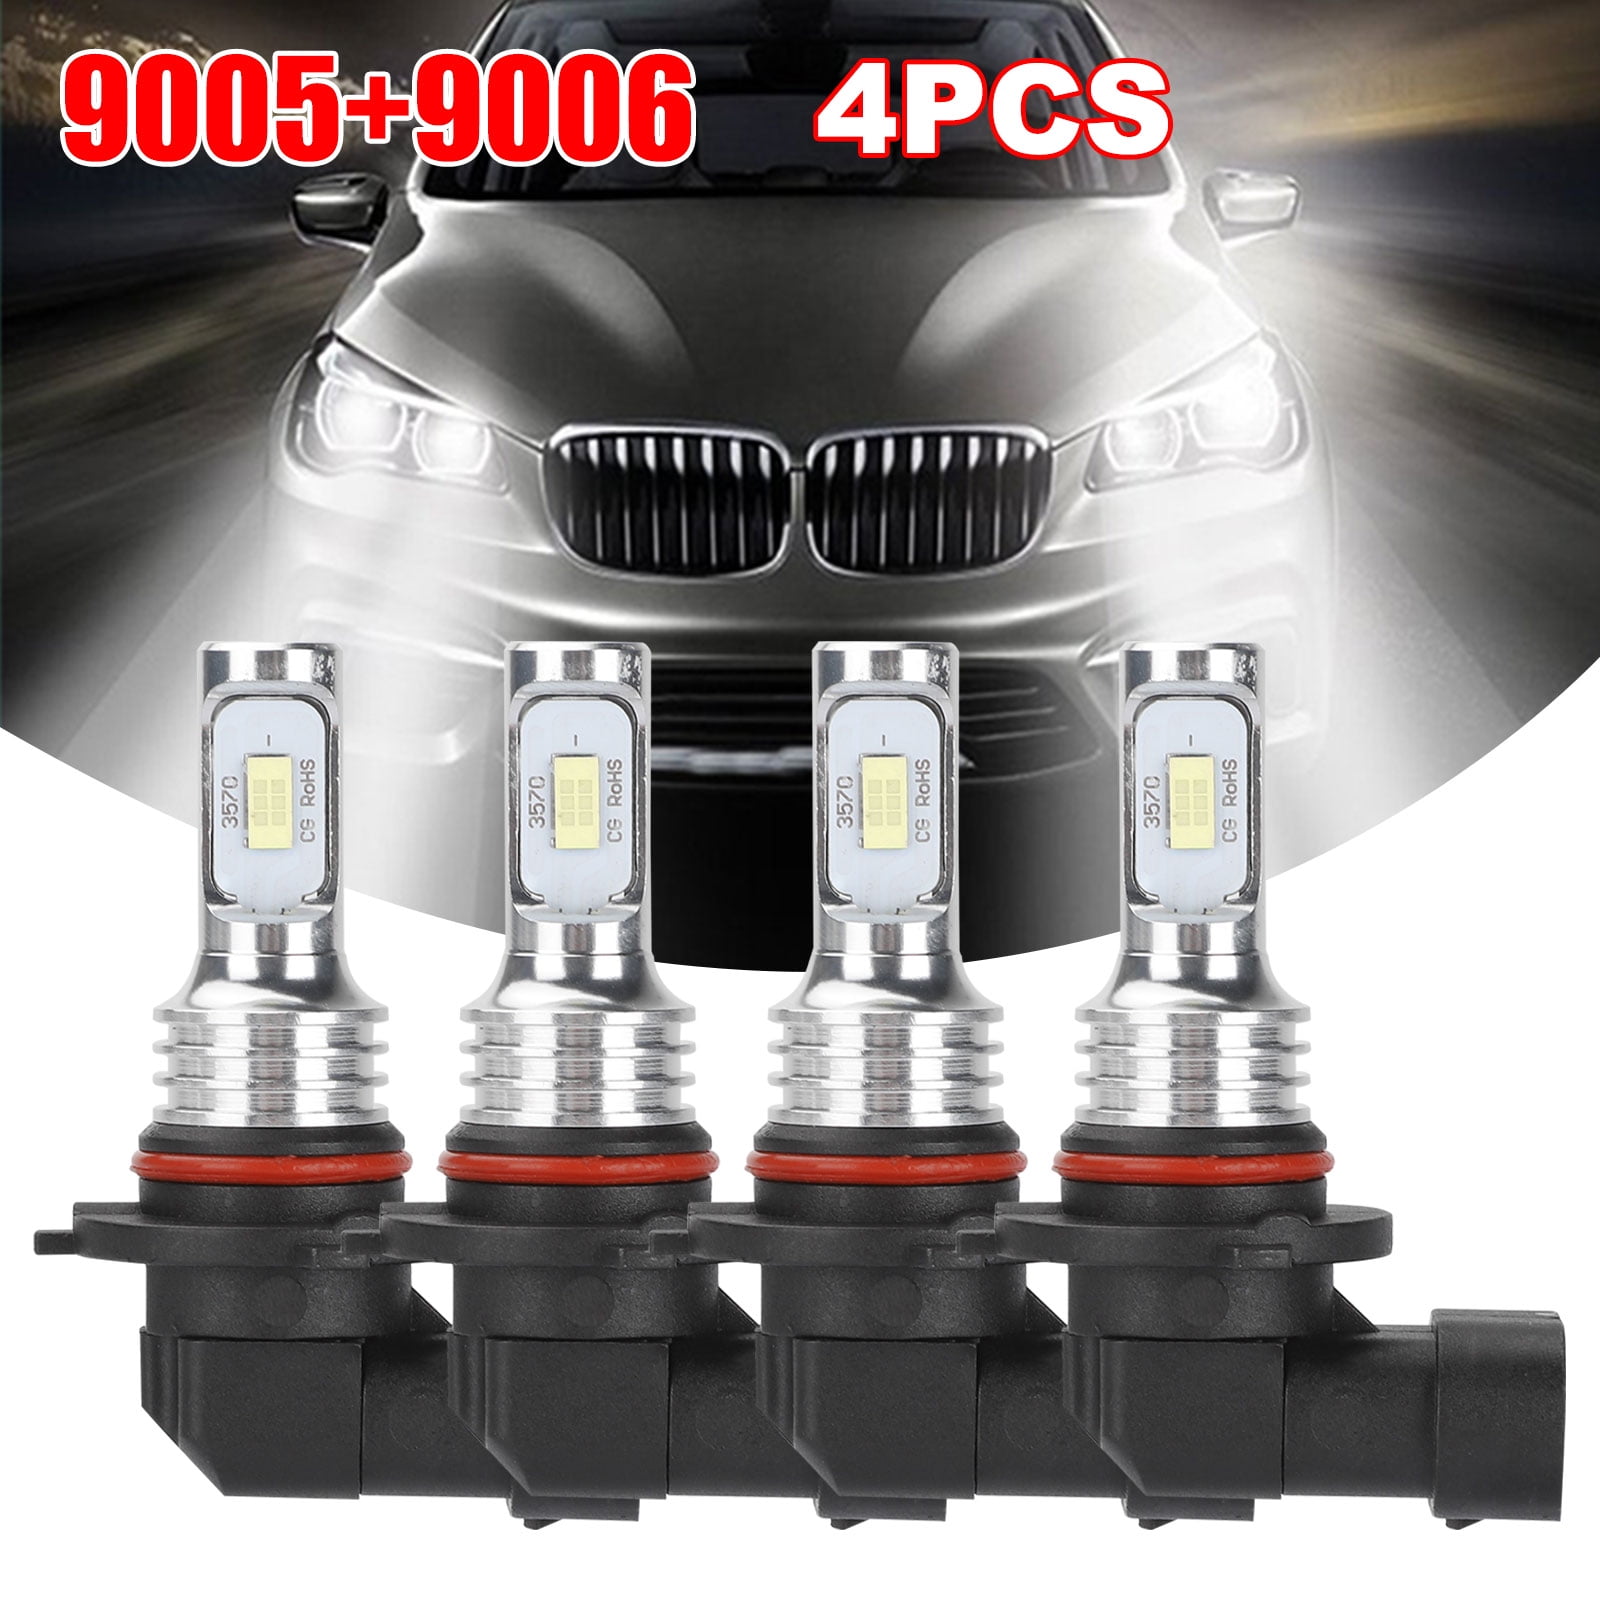 4PCS LED Headlight Bulbs 9005 HB3 9006 HB4, 40W 4000 Lumens Super